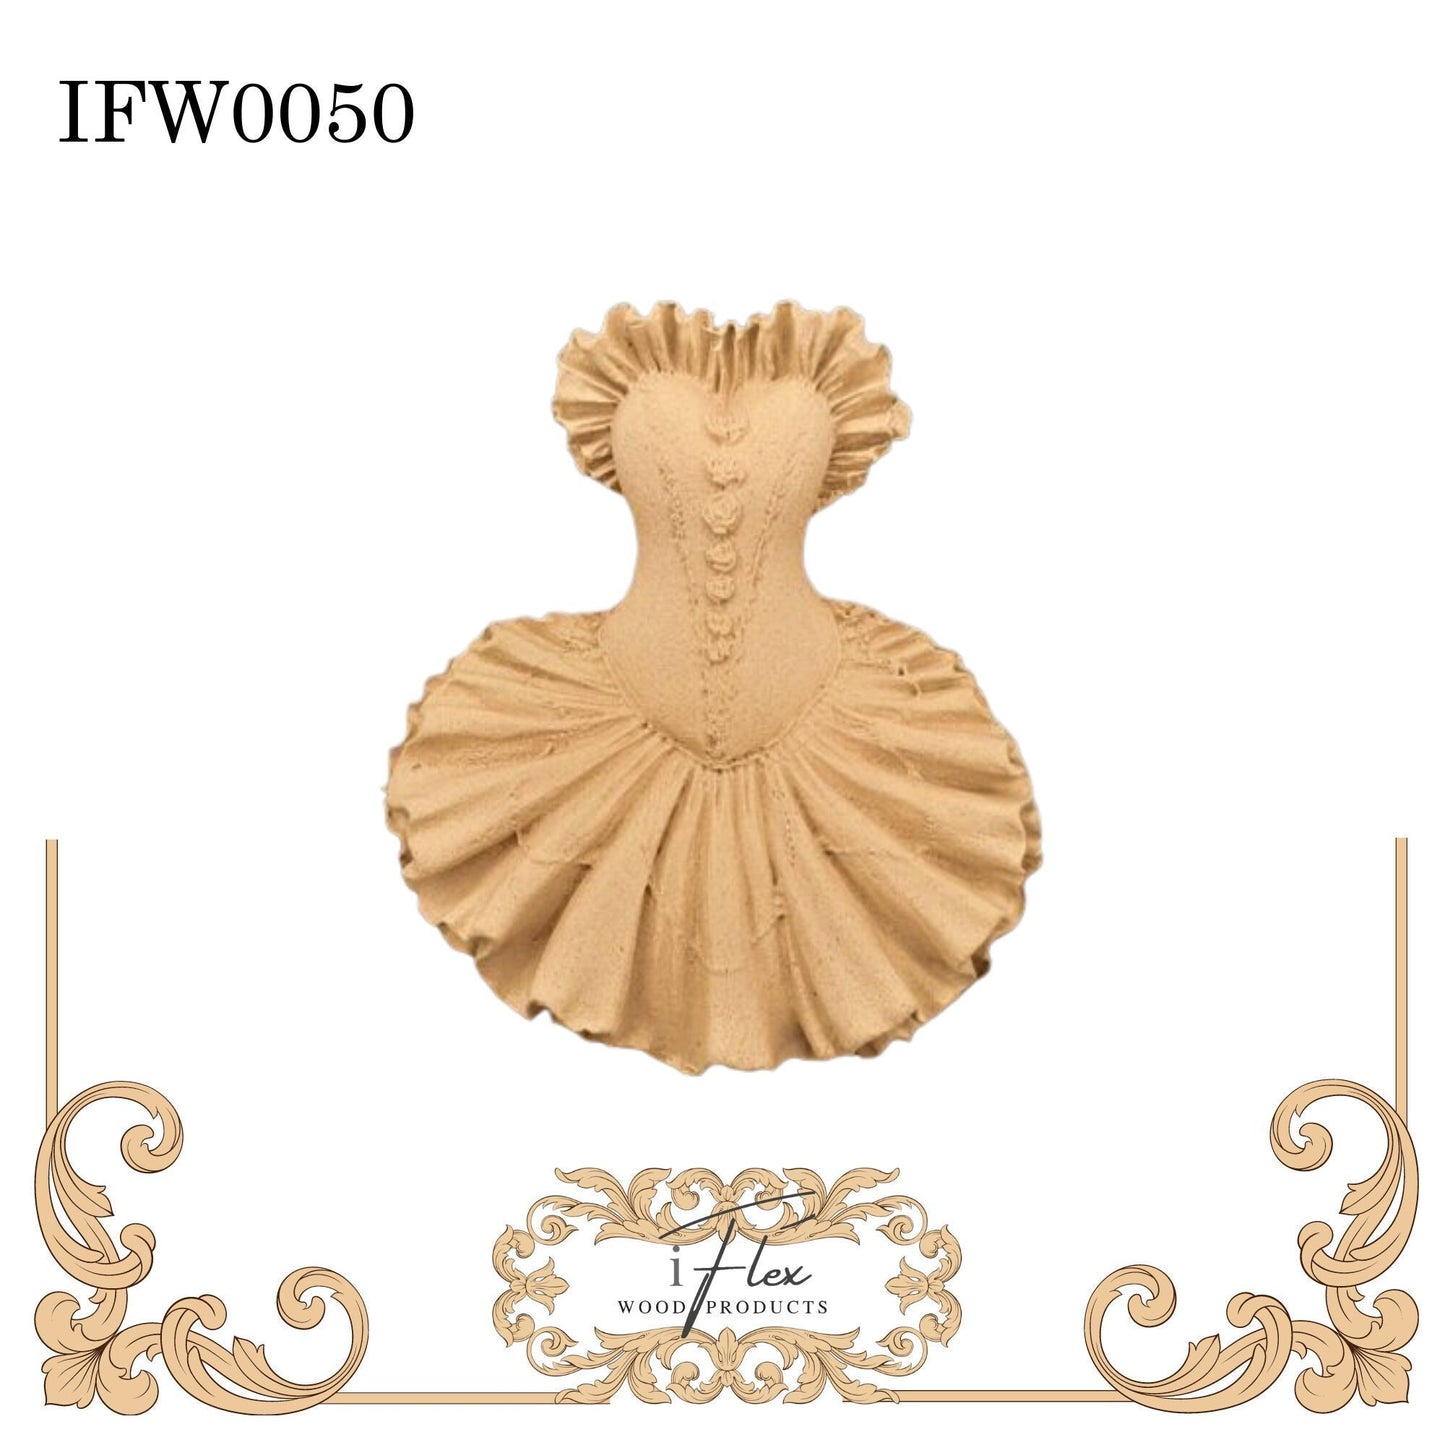 IFW 0050 Ballerina dress bendable moulding, crafting embellishment